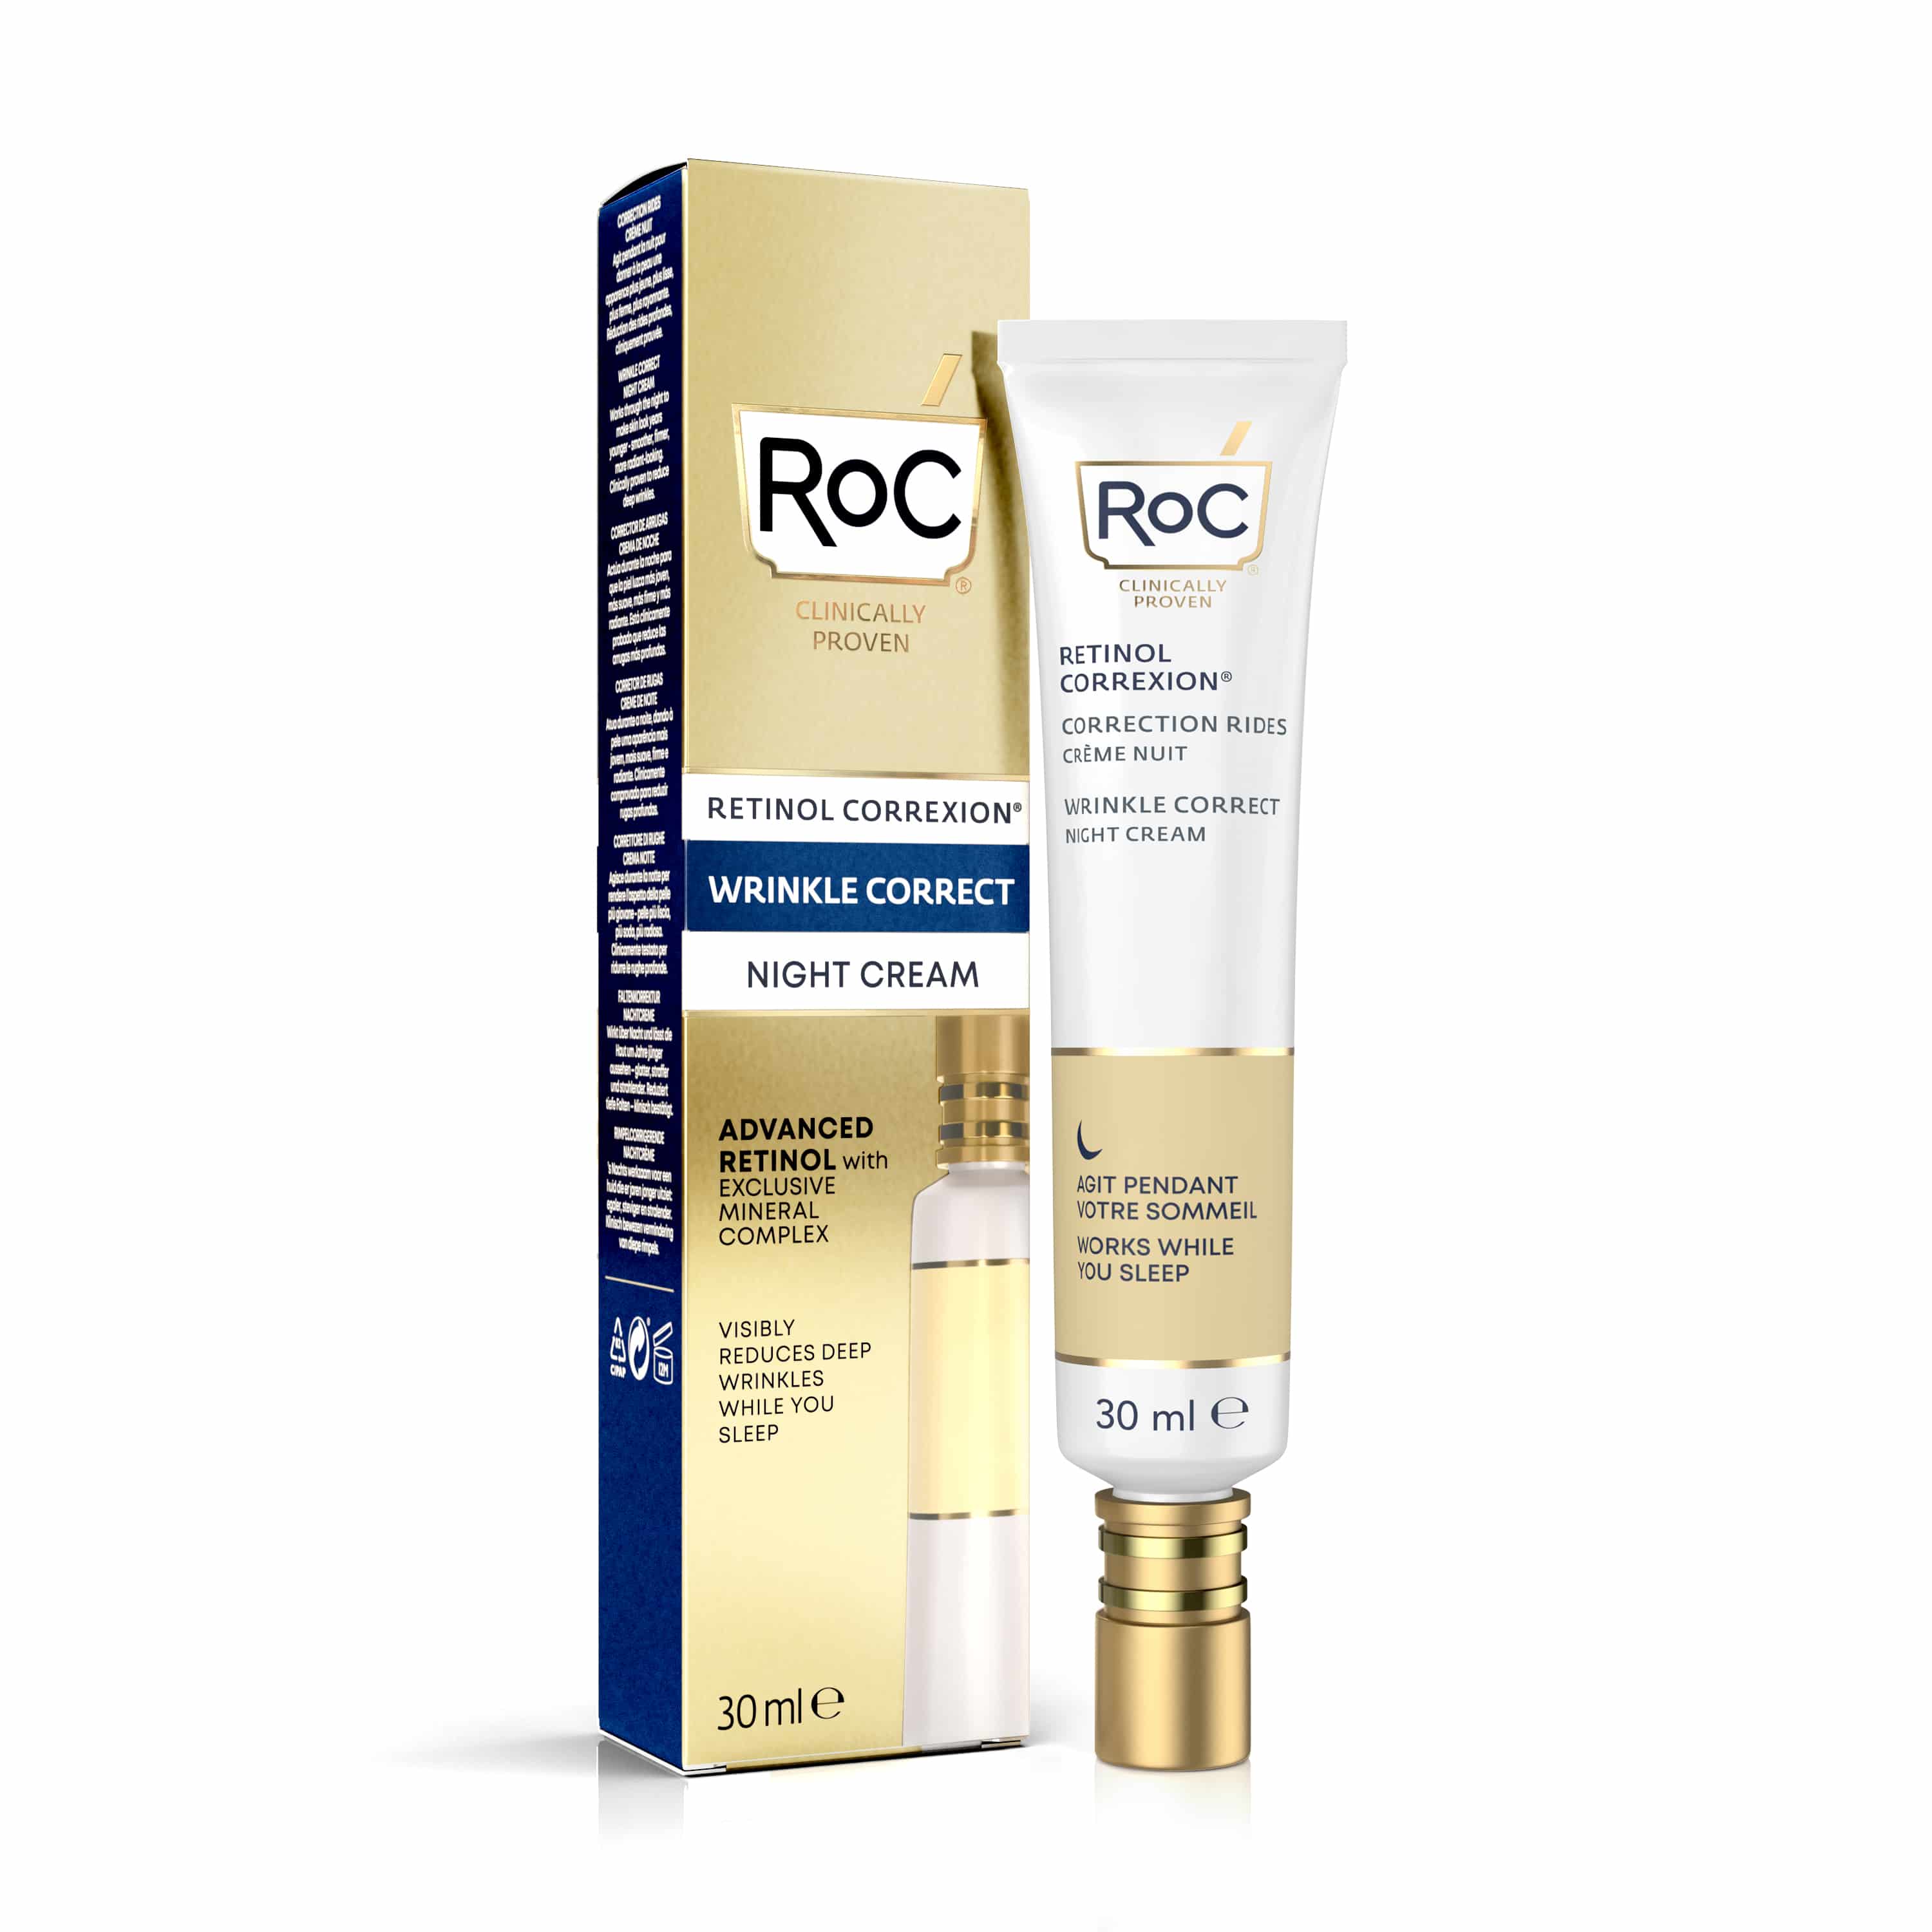 RoC Retinol Correxion Wrinkle Correct Night Cream